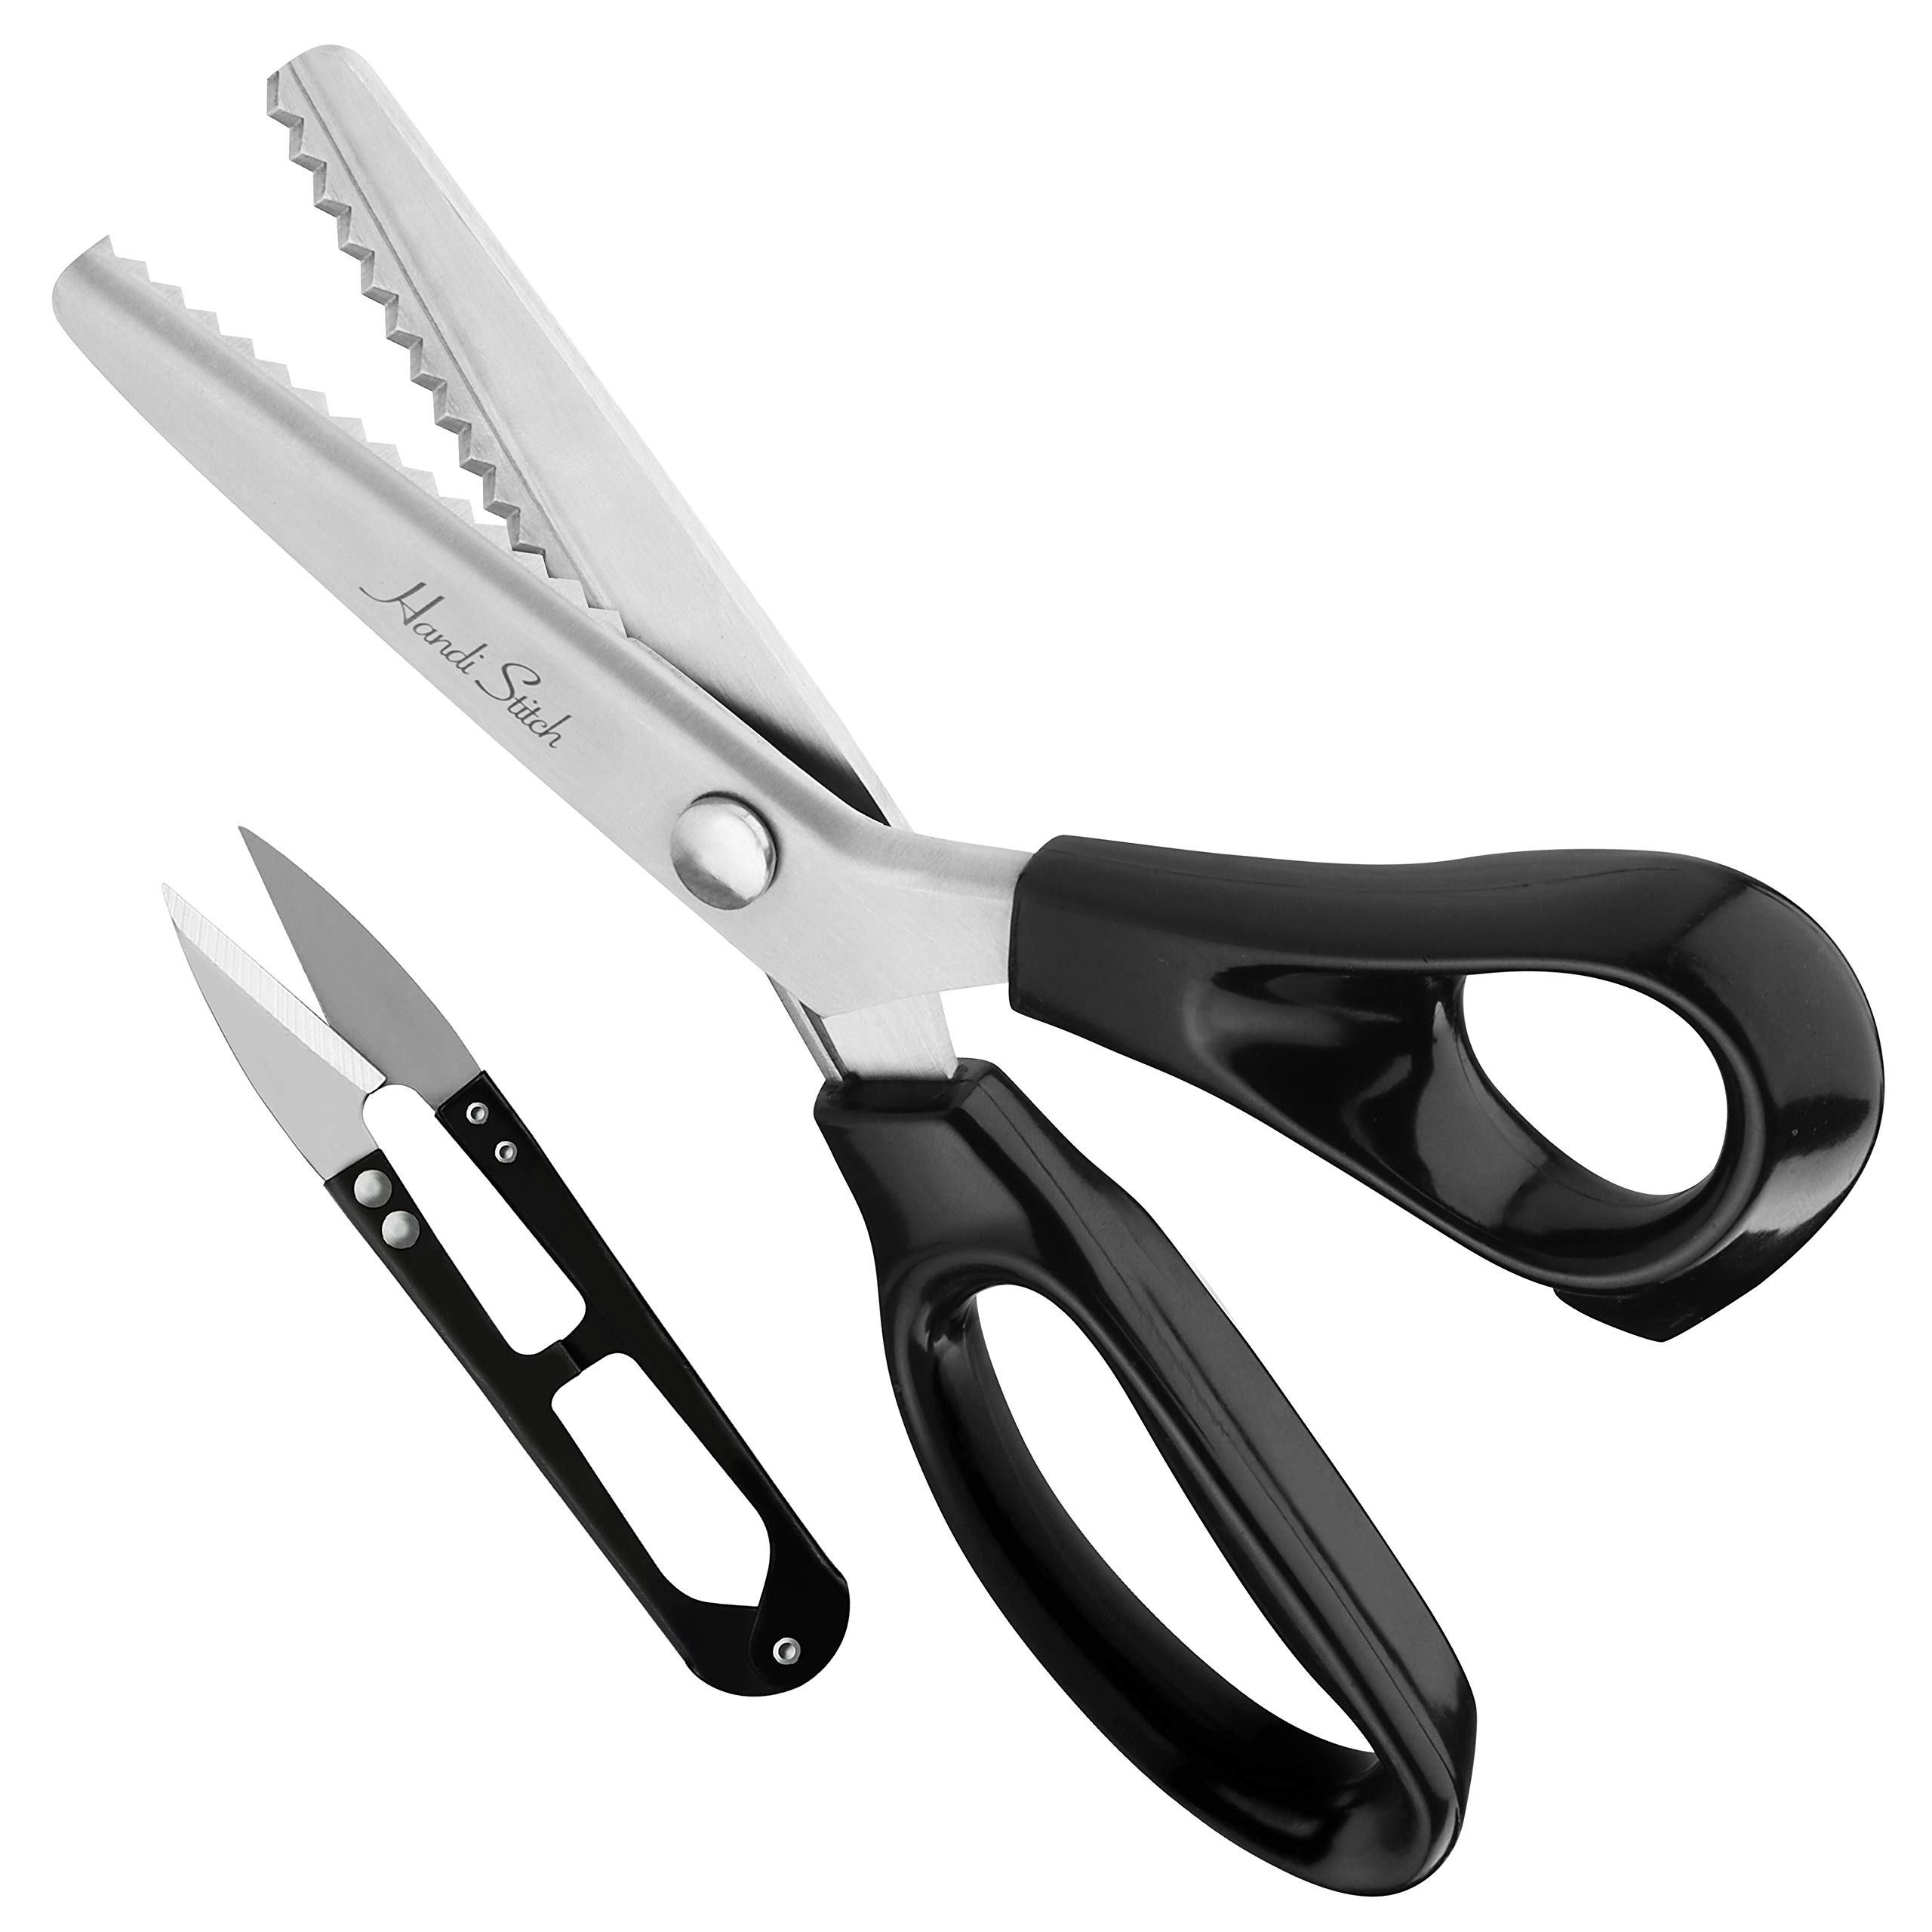  Stainless Steel Sharp Tailor Scissors for Clothing